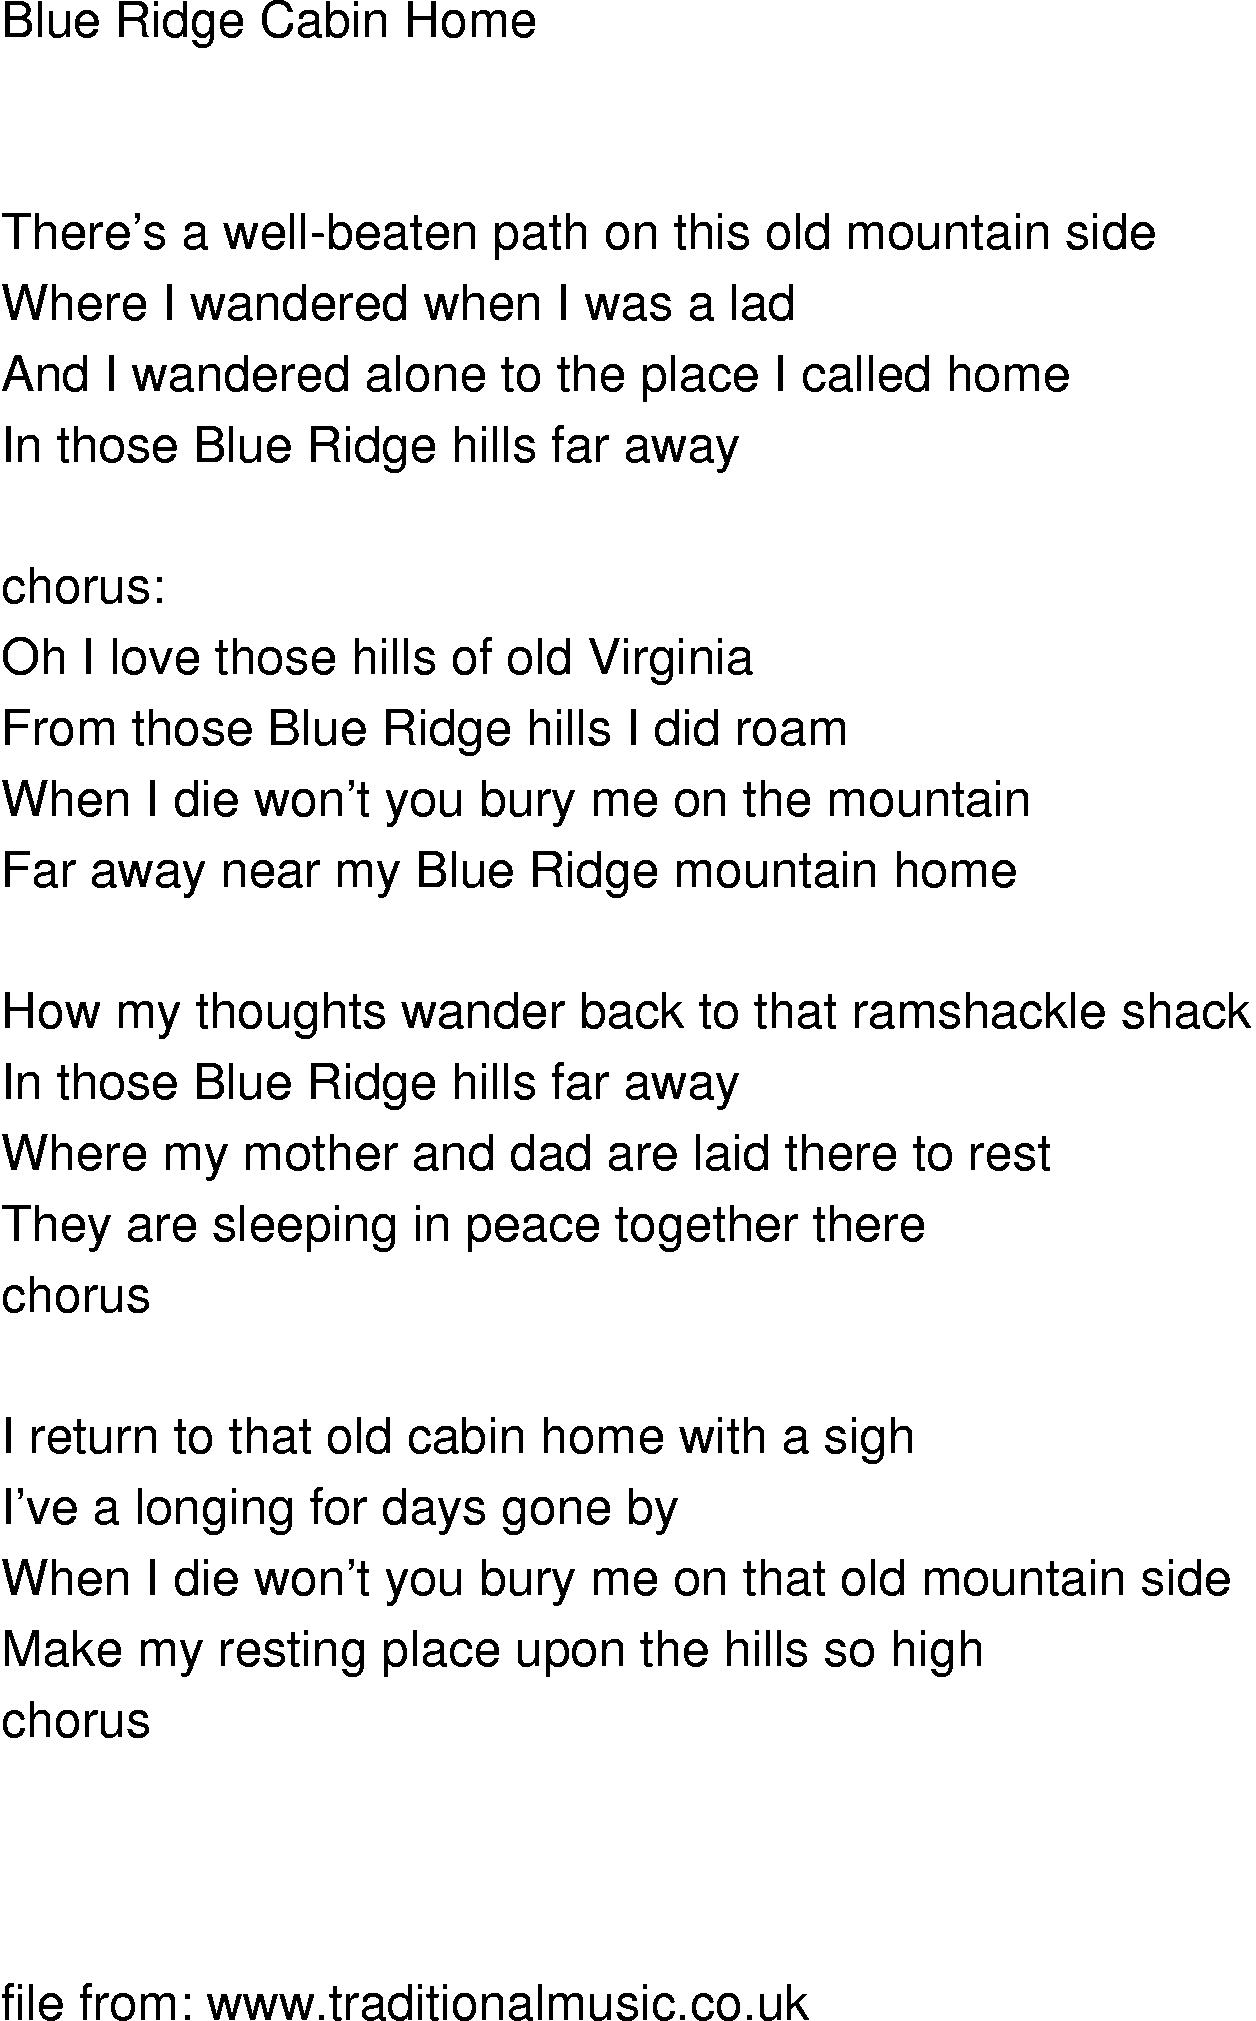 Old-Time (oldtimey) Song Lyrics - blue ridge cabin home